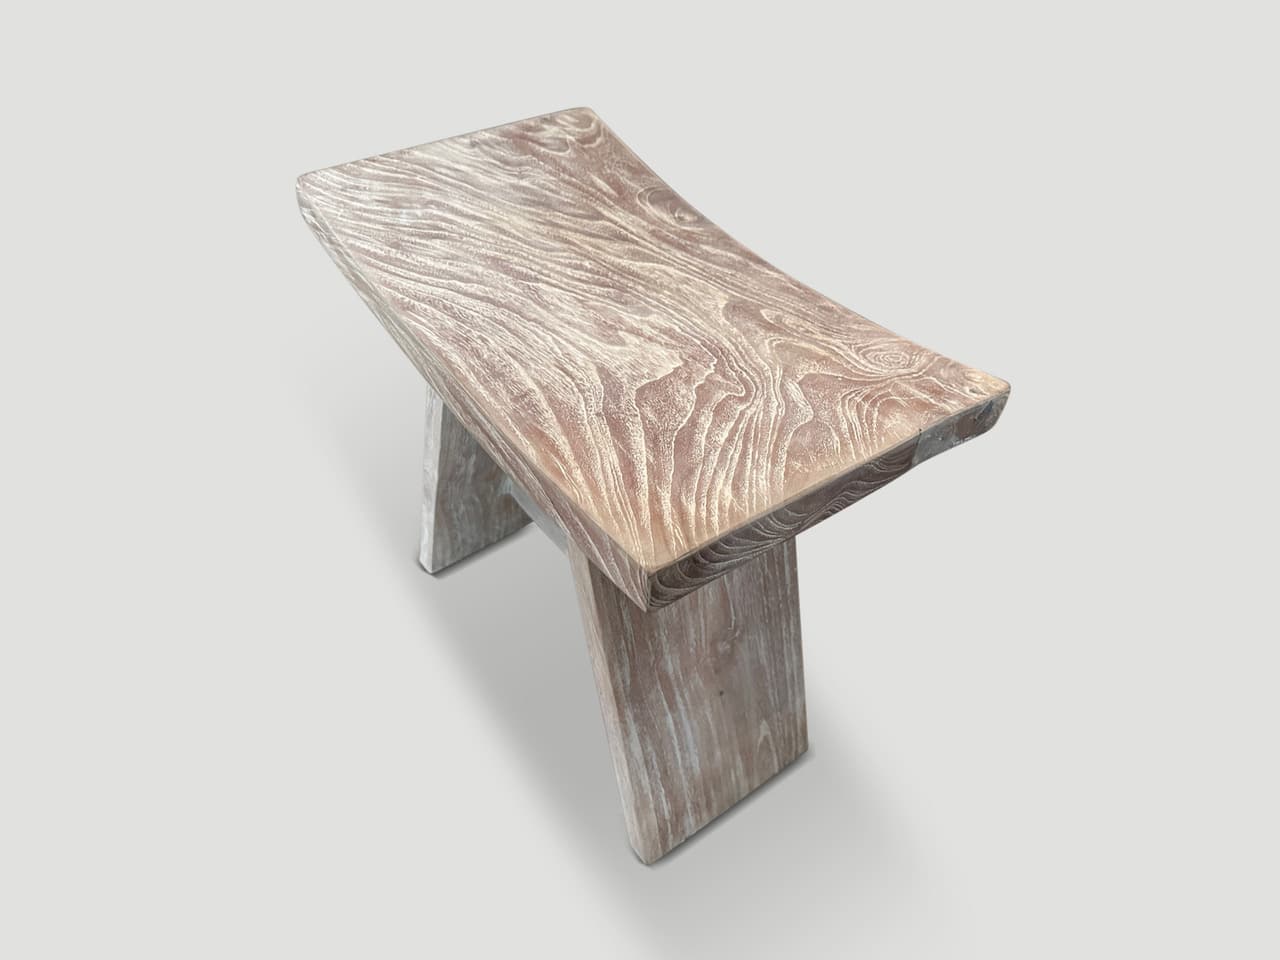 sleek minimalist bench or stool